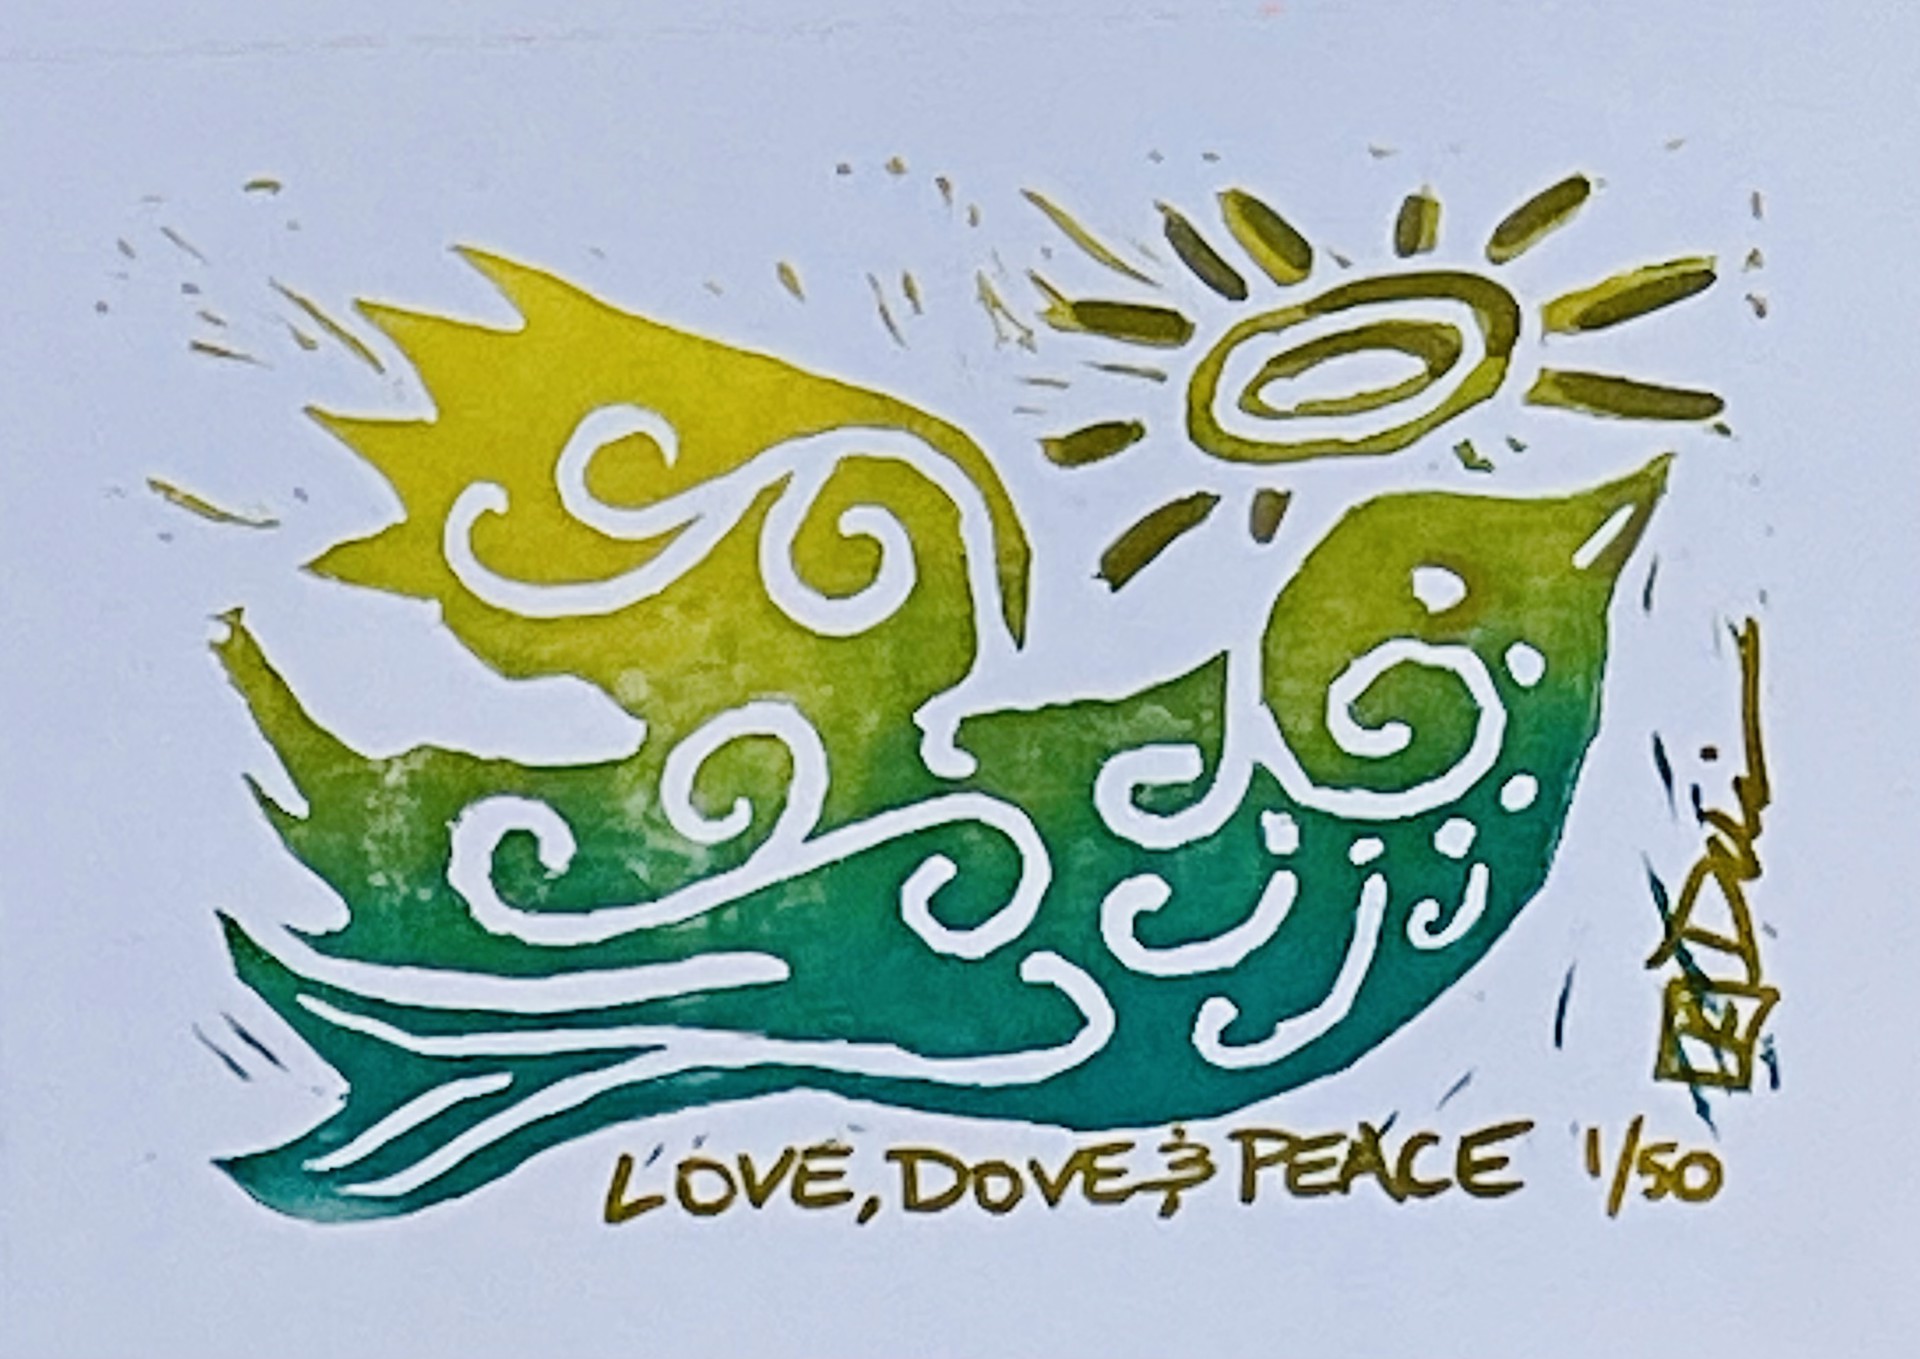 Love, Dove & Peace Print Green/Gold by Keri Davis